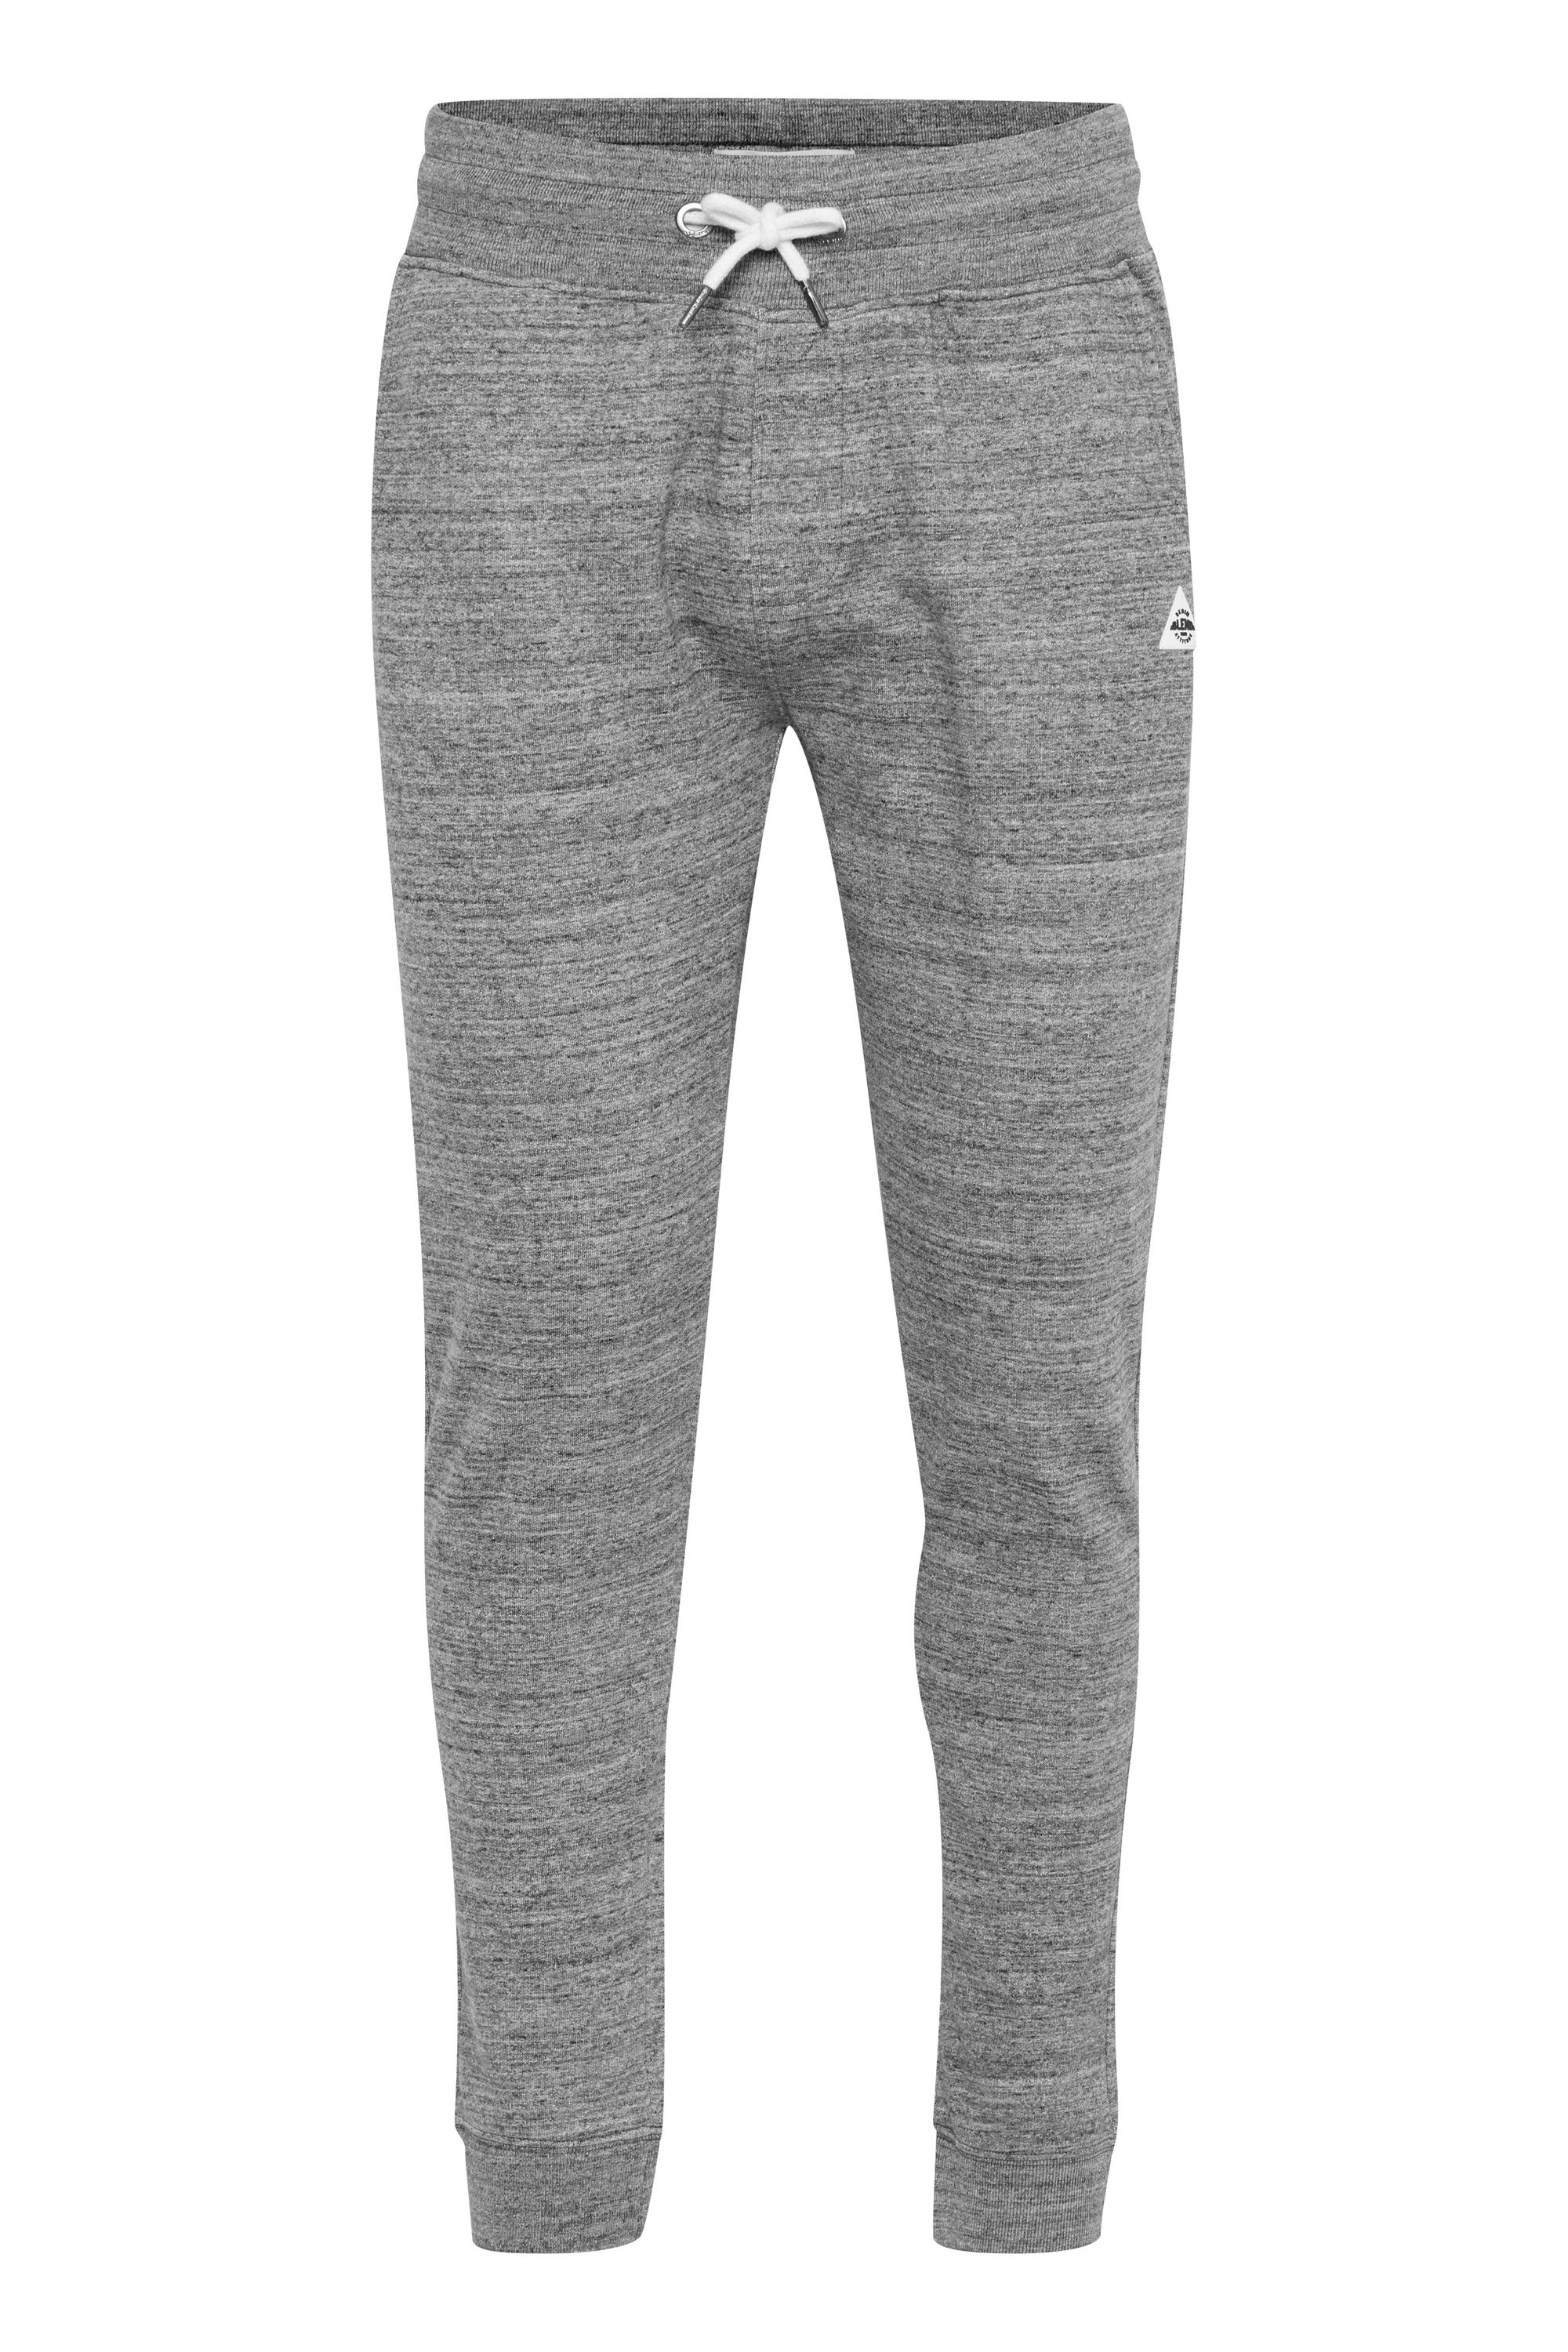 Тканевые брюки BLEND Jogging BHHenny, серый